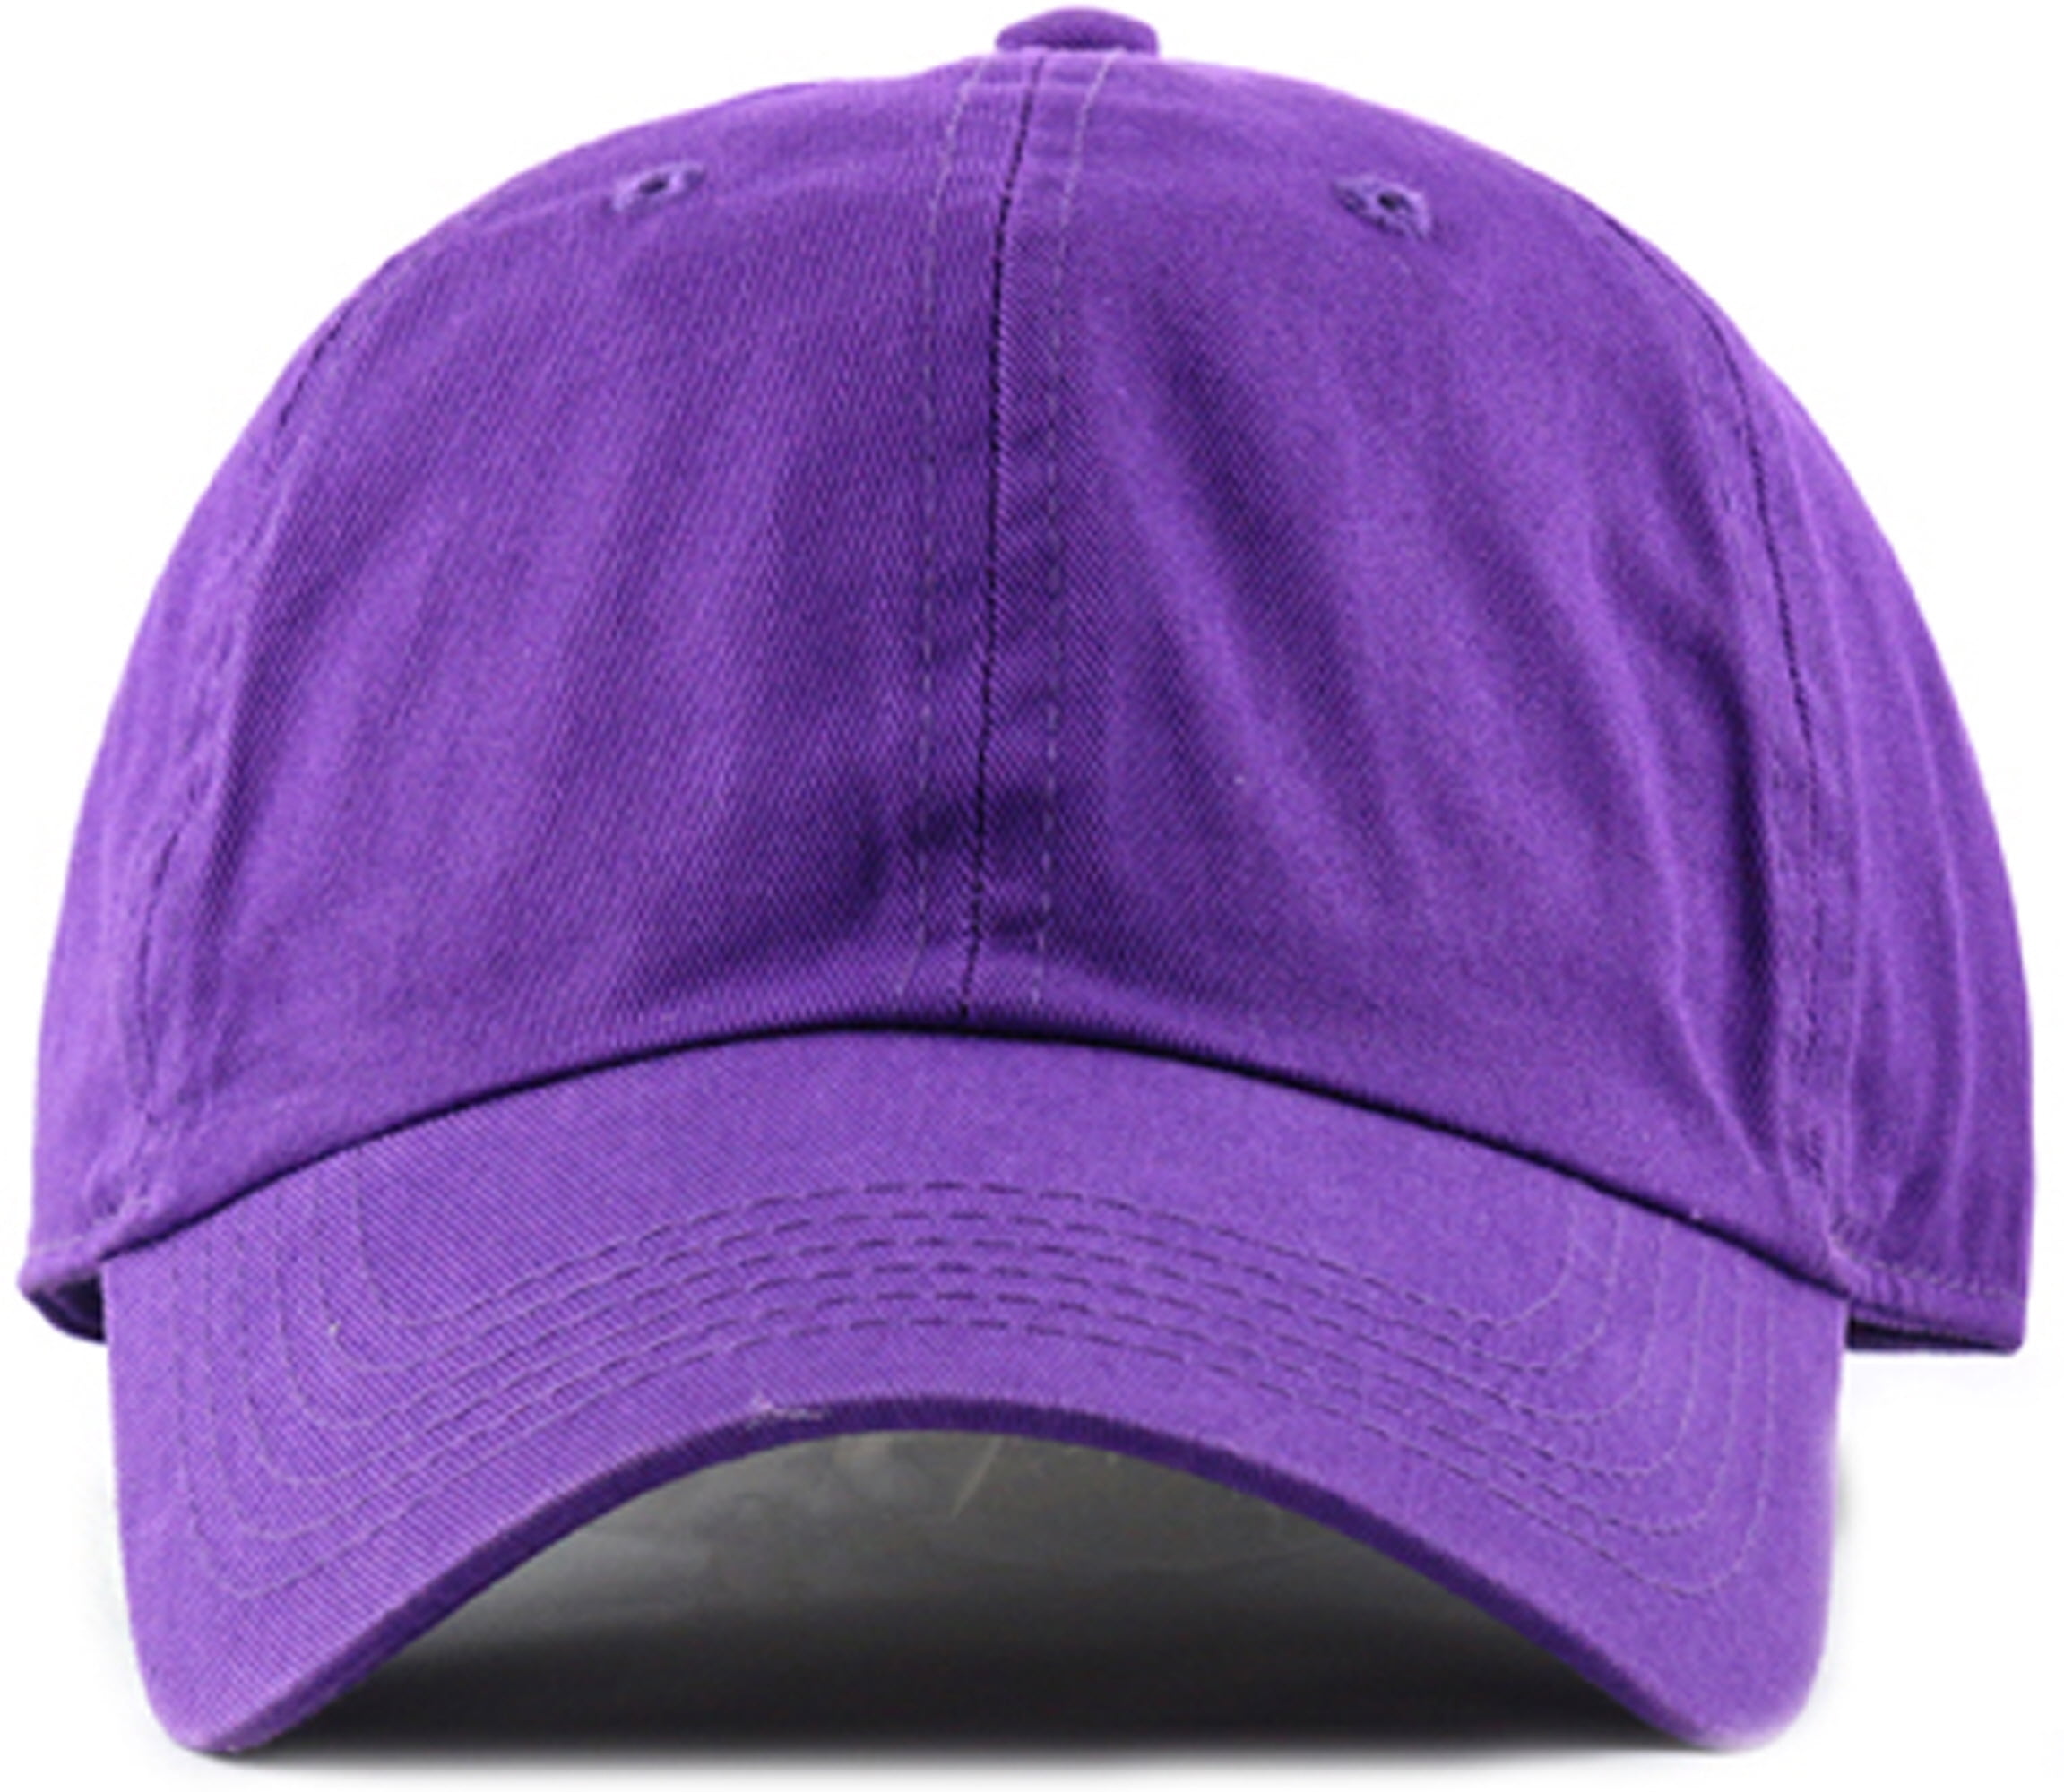 Mirmaru Plain Stonewashed Cotton Adjustable Hat Low Profile Baseball